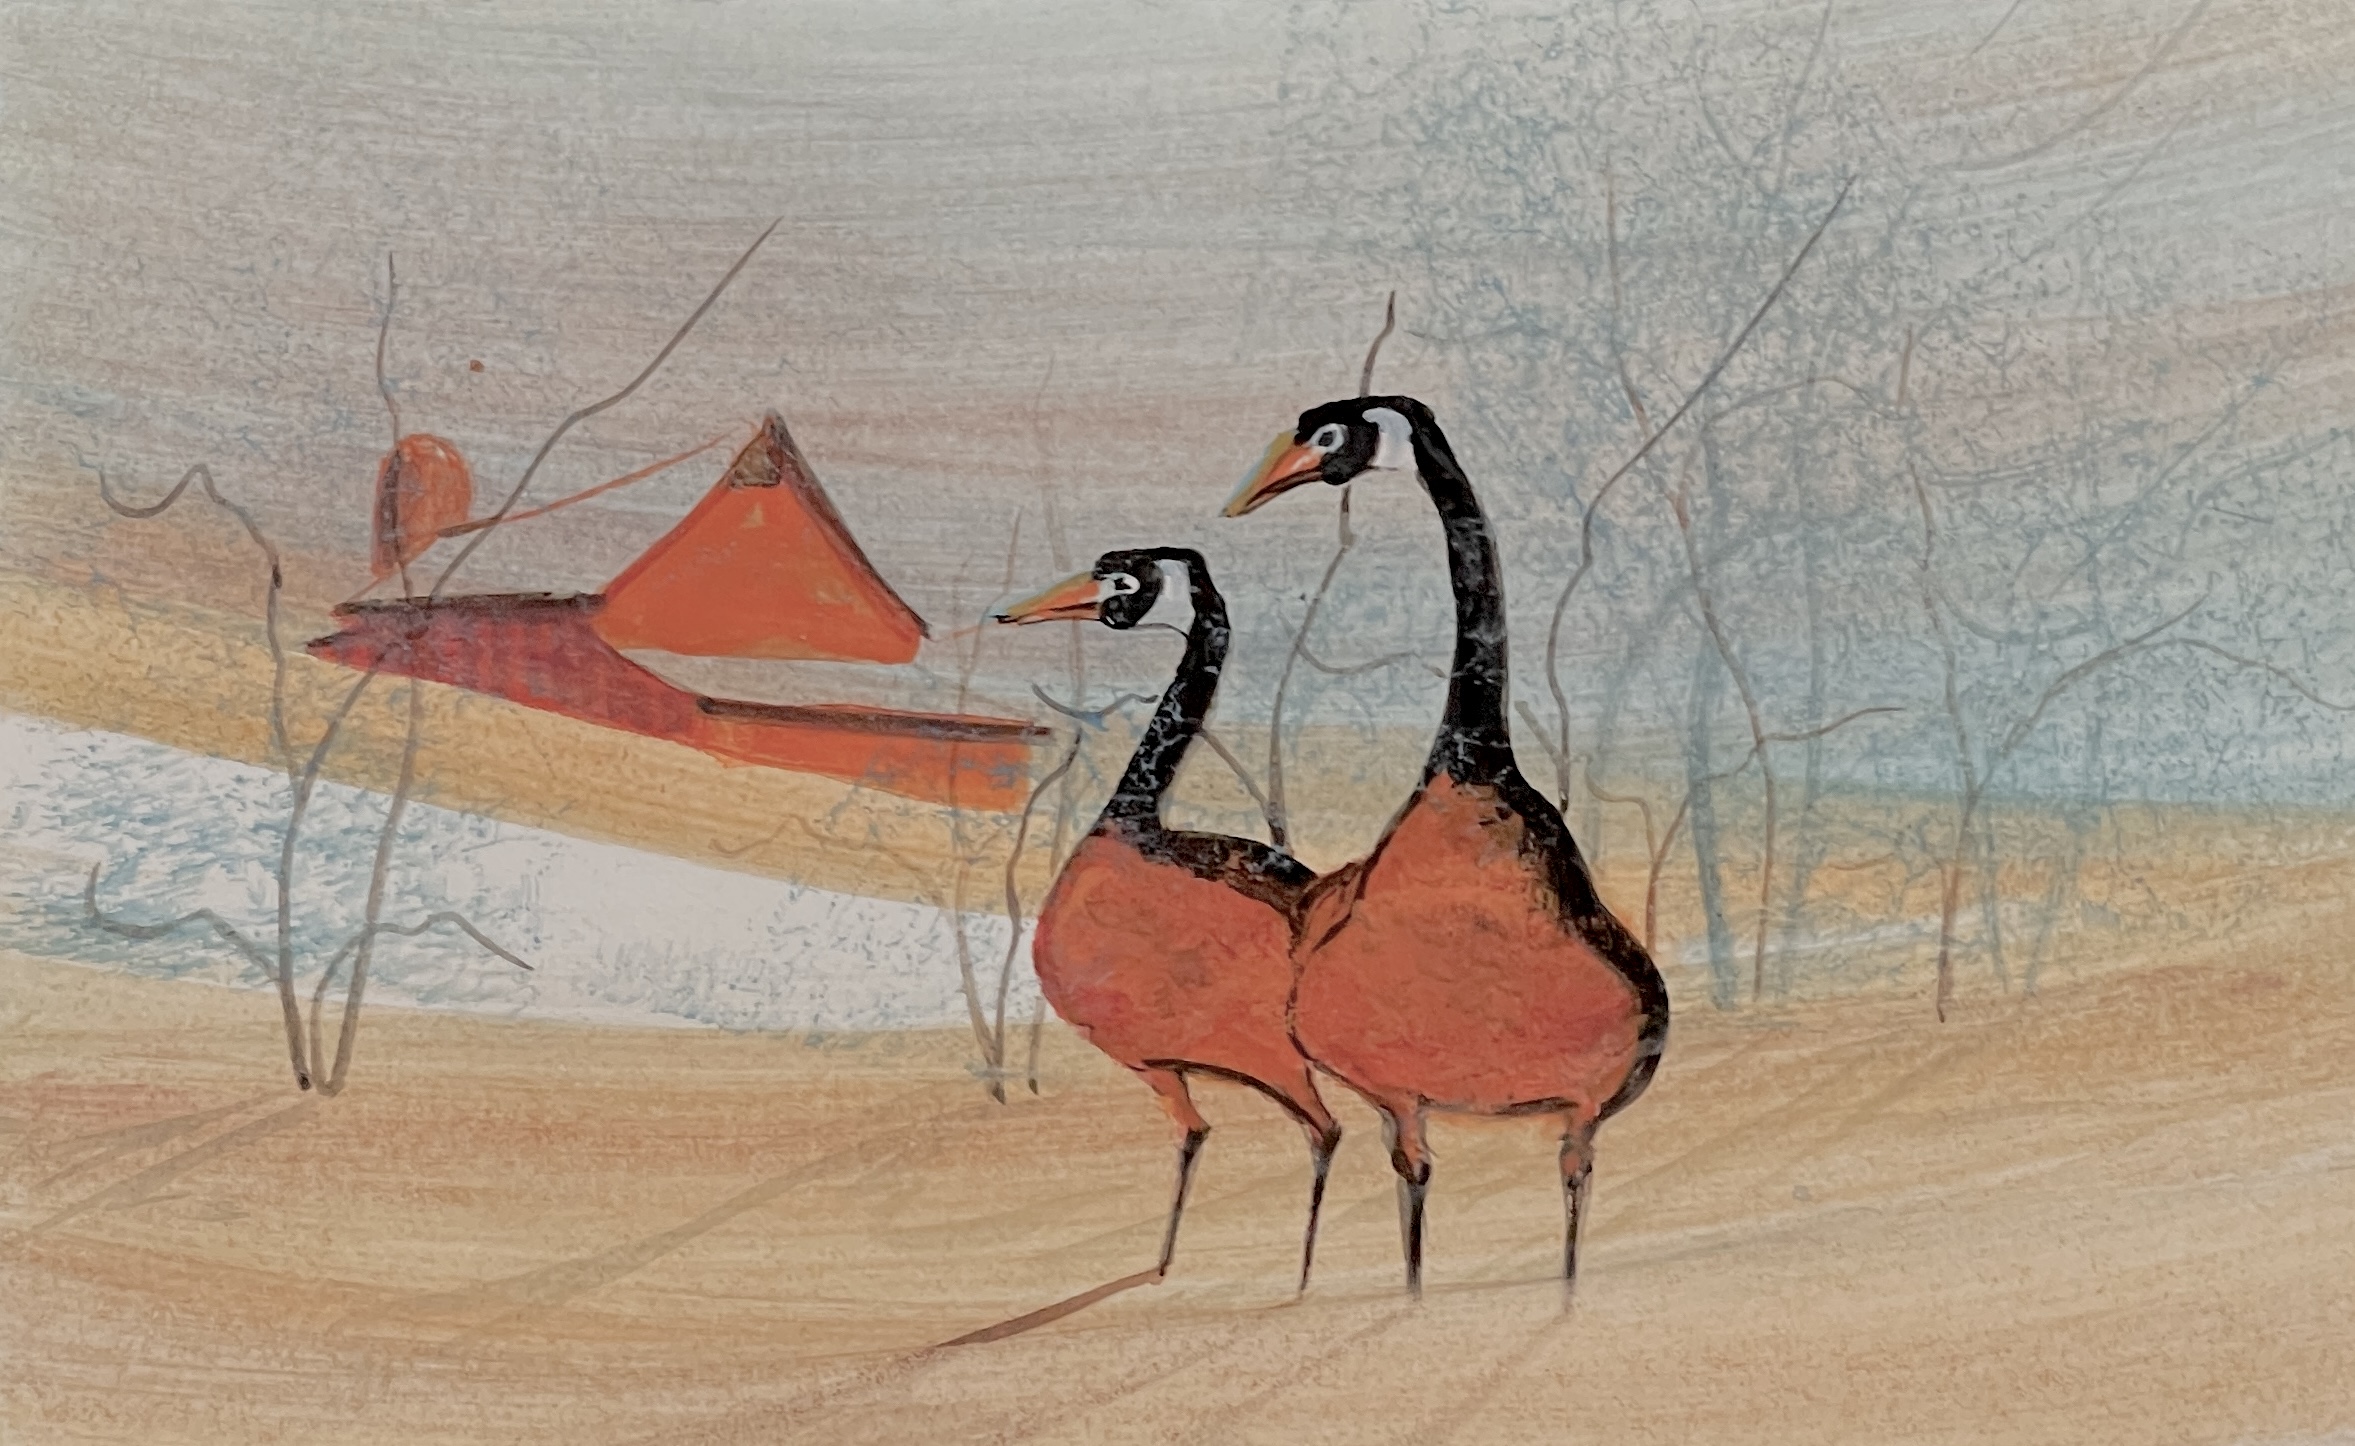 p-buckley-moss-original-watercolor-painting-geese